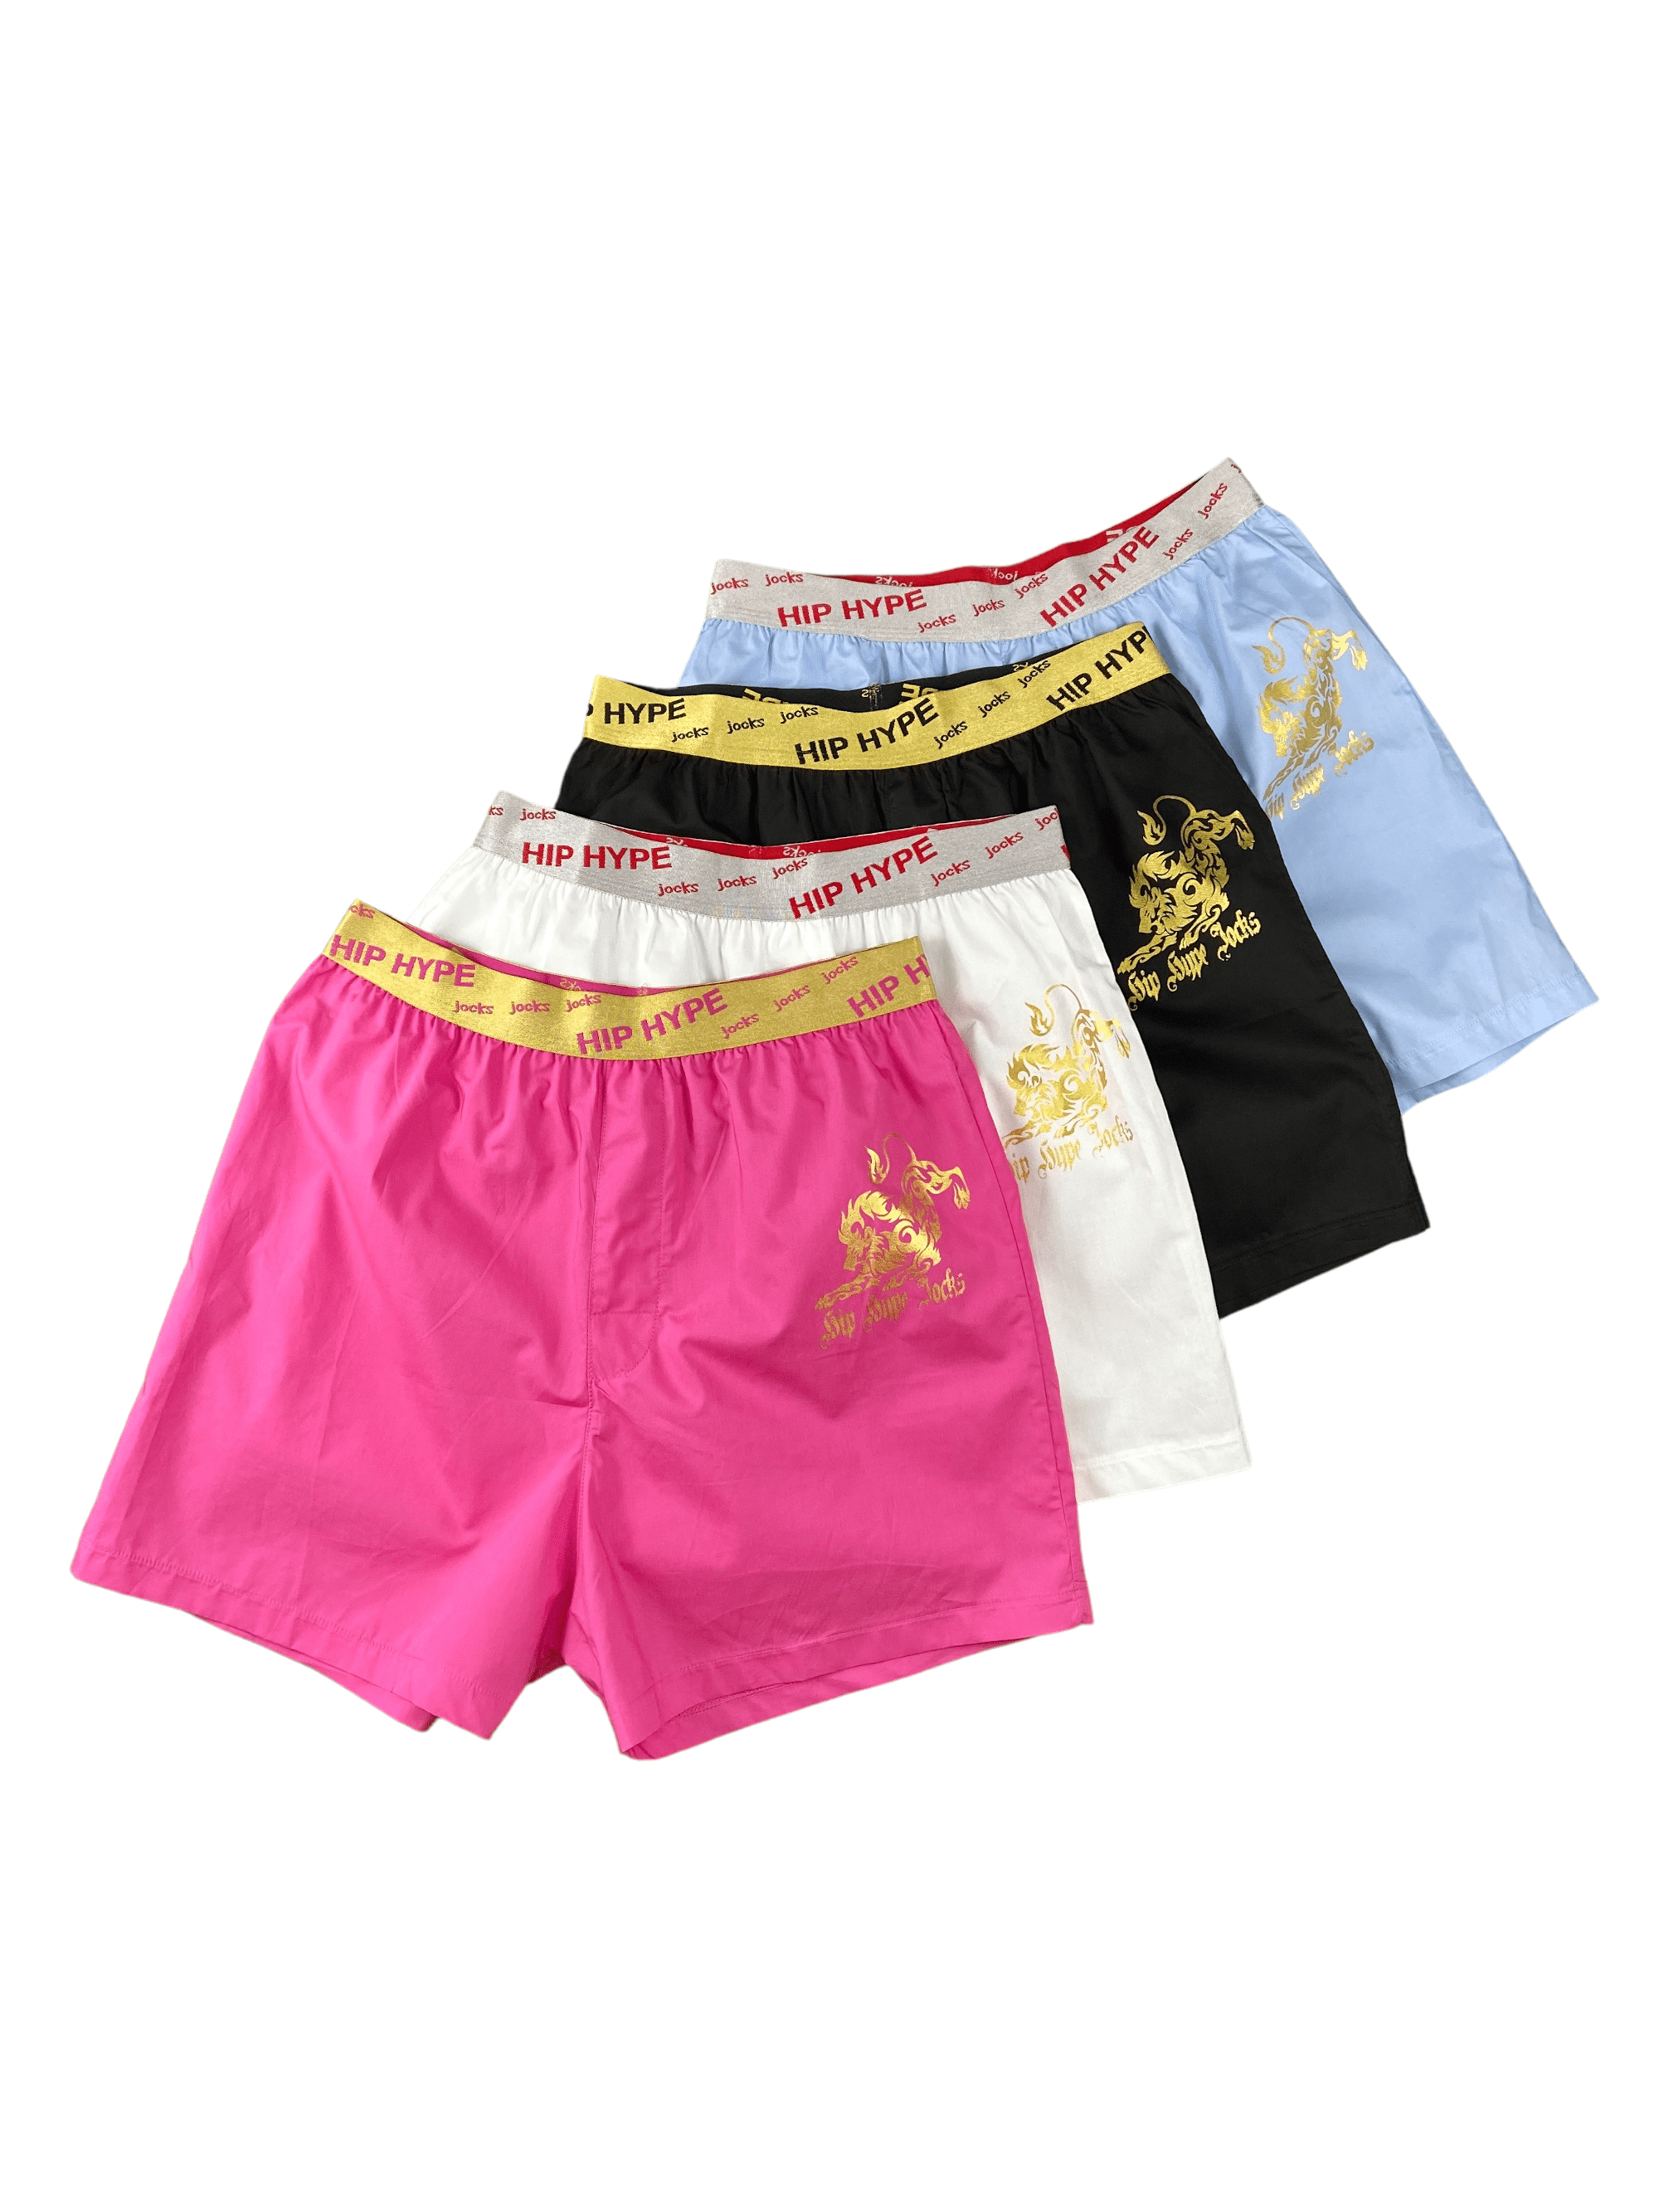 Hip Hype Jocks Men Boxer Brief Underwear Soft Cotton Comfortable Breathable  Tag Free Designer Waistband, Workout Boxer Men's 4 Pack